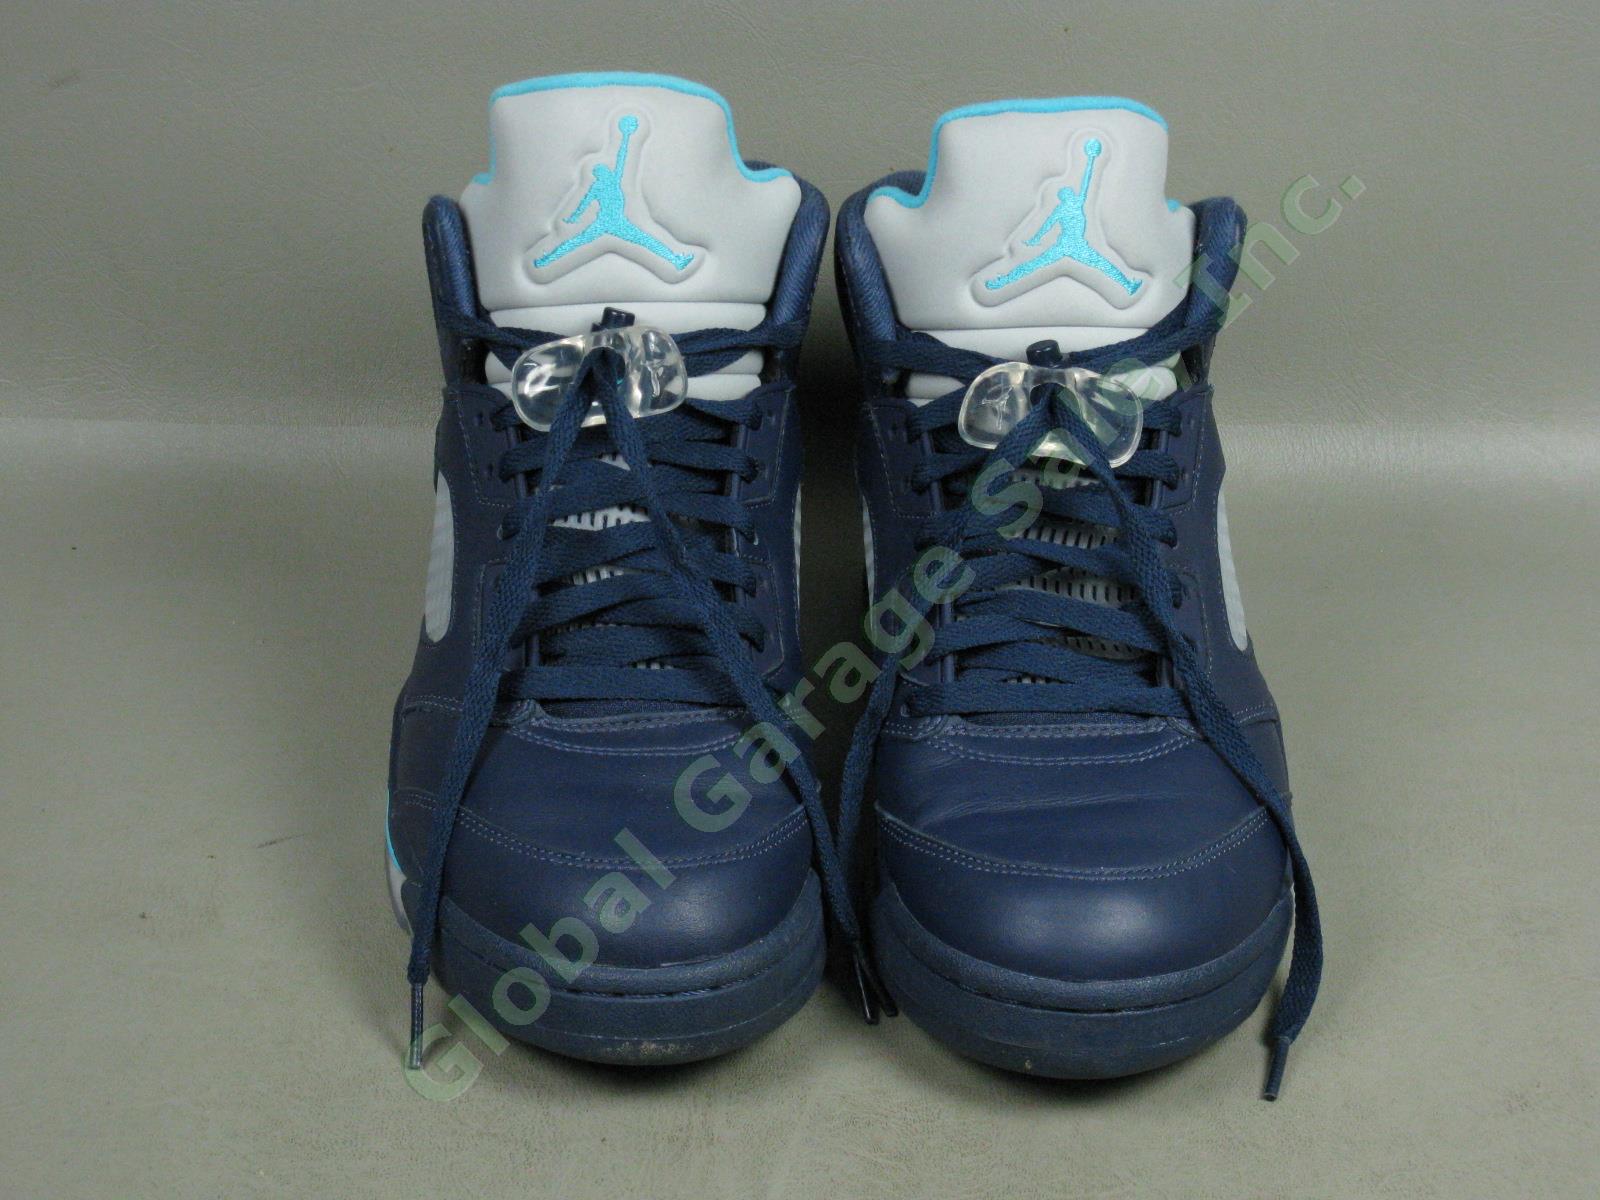 Nike Air Jordan 5 V Retro Hornets Shoes Midnight Navy Blue White 136027-405 Sz 9 1